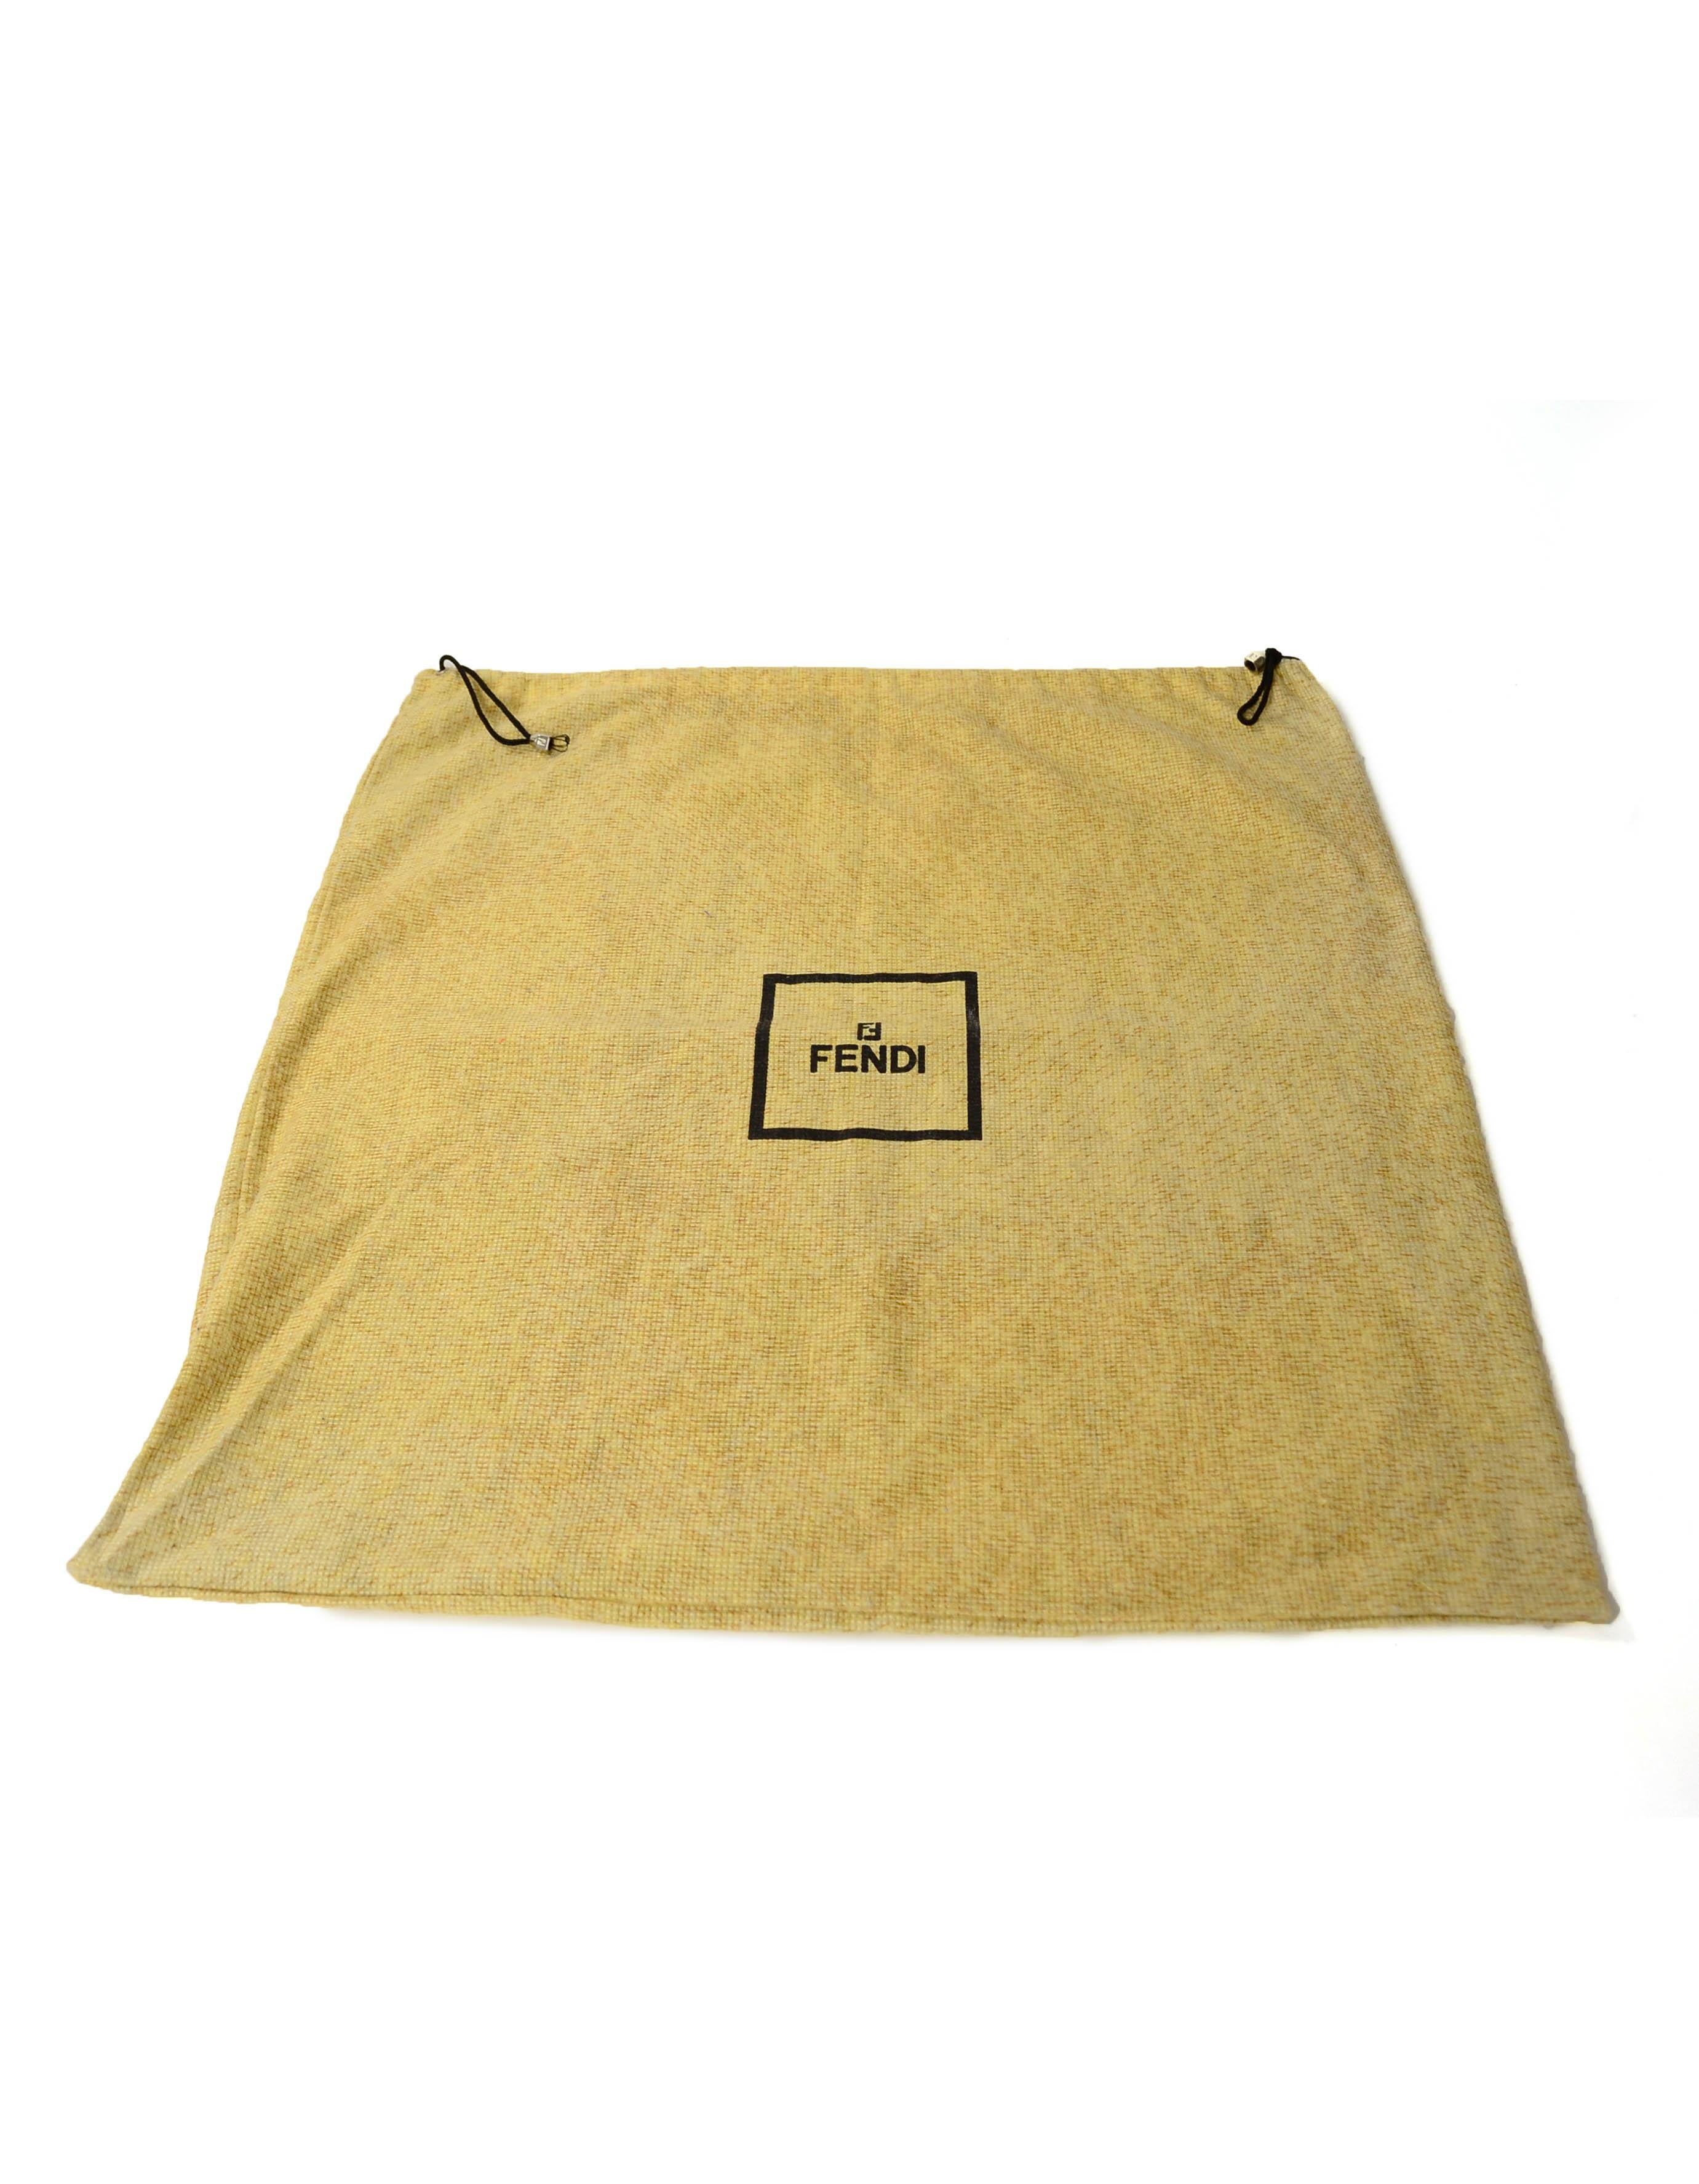 Fendi Vintage '90s Tobacco Brown Canvas Zucca Monogram Tote Bag 1